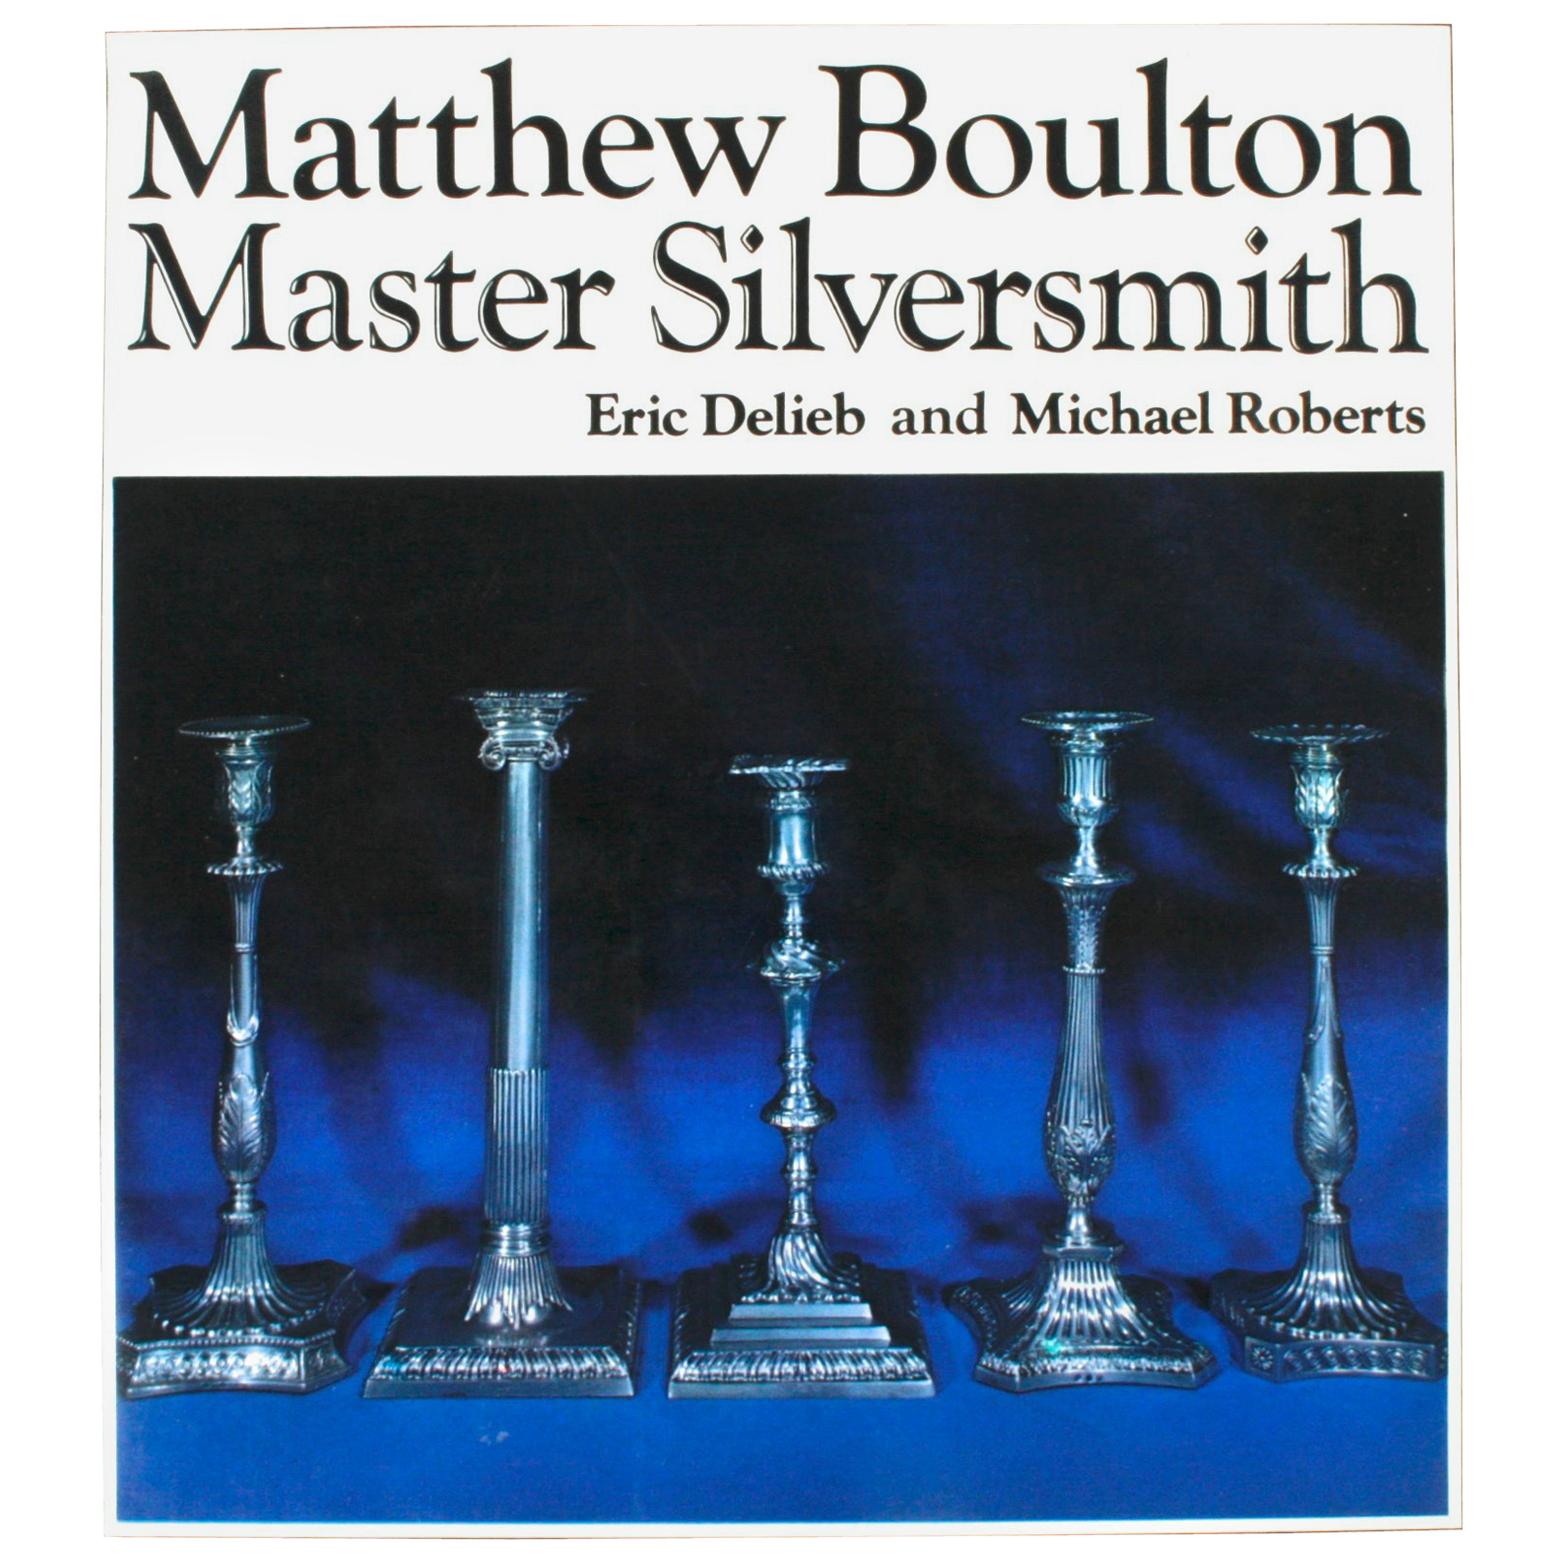 Matthew Boulton Master Silversmith, First Edition